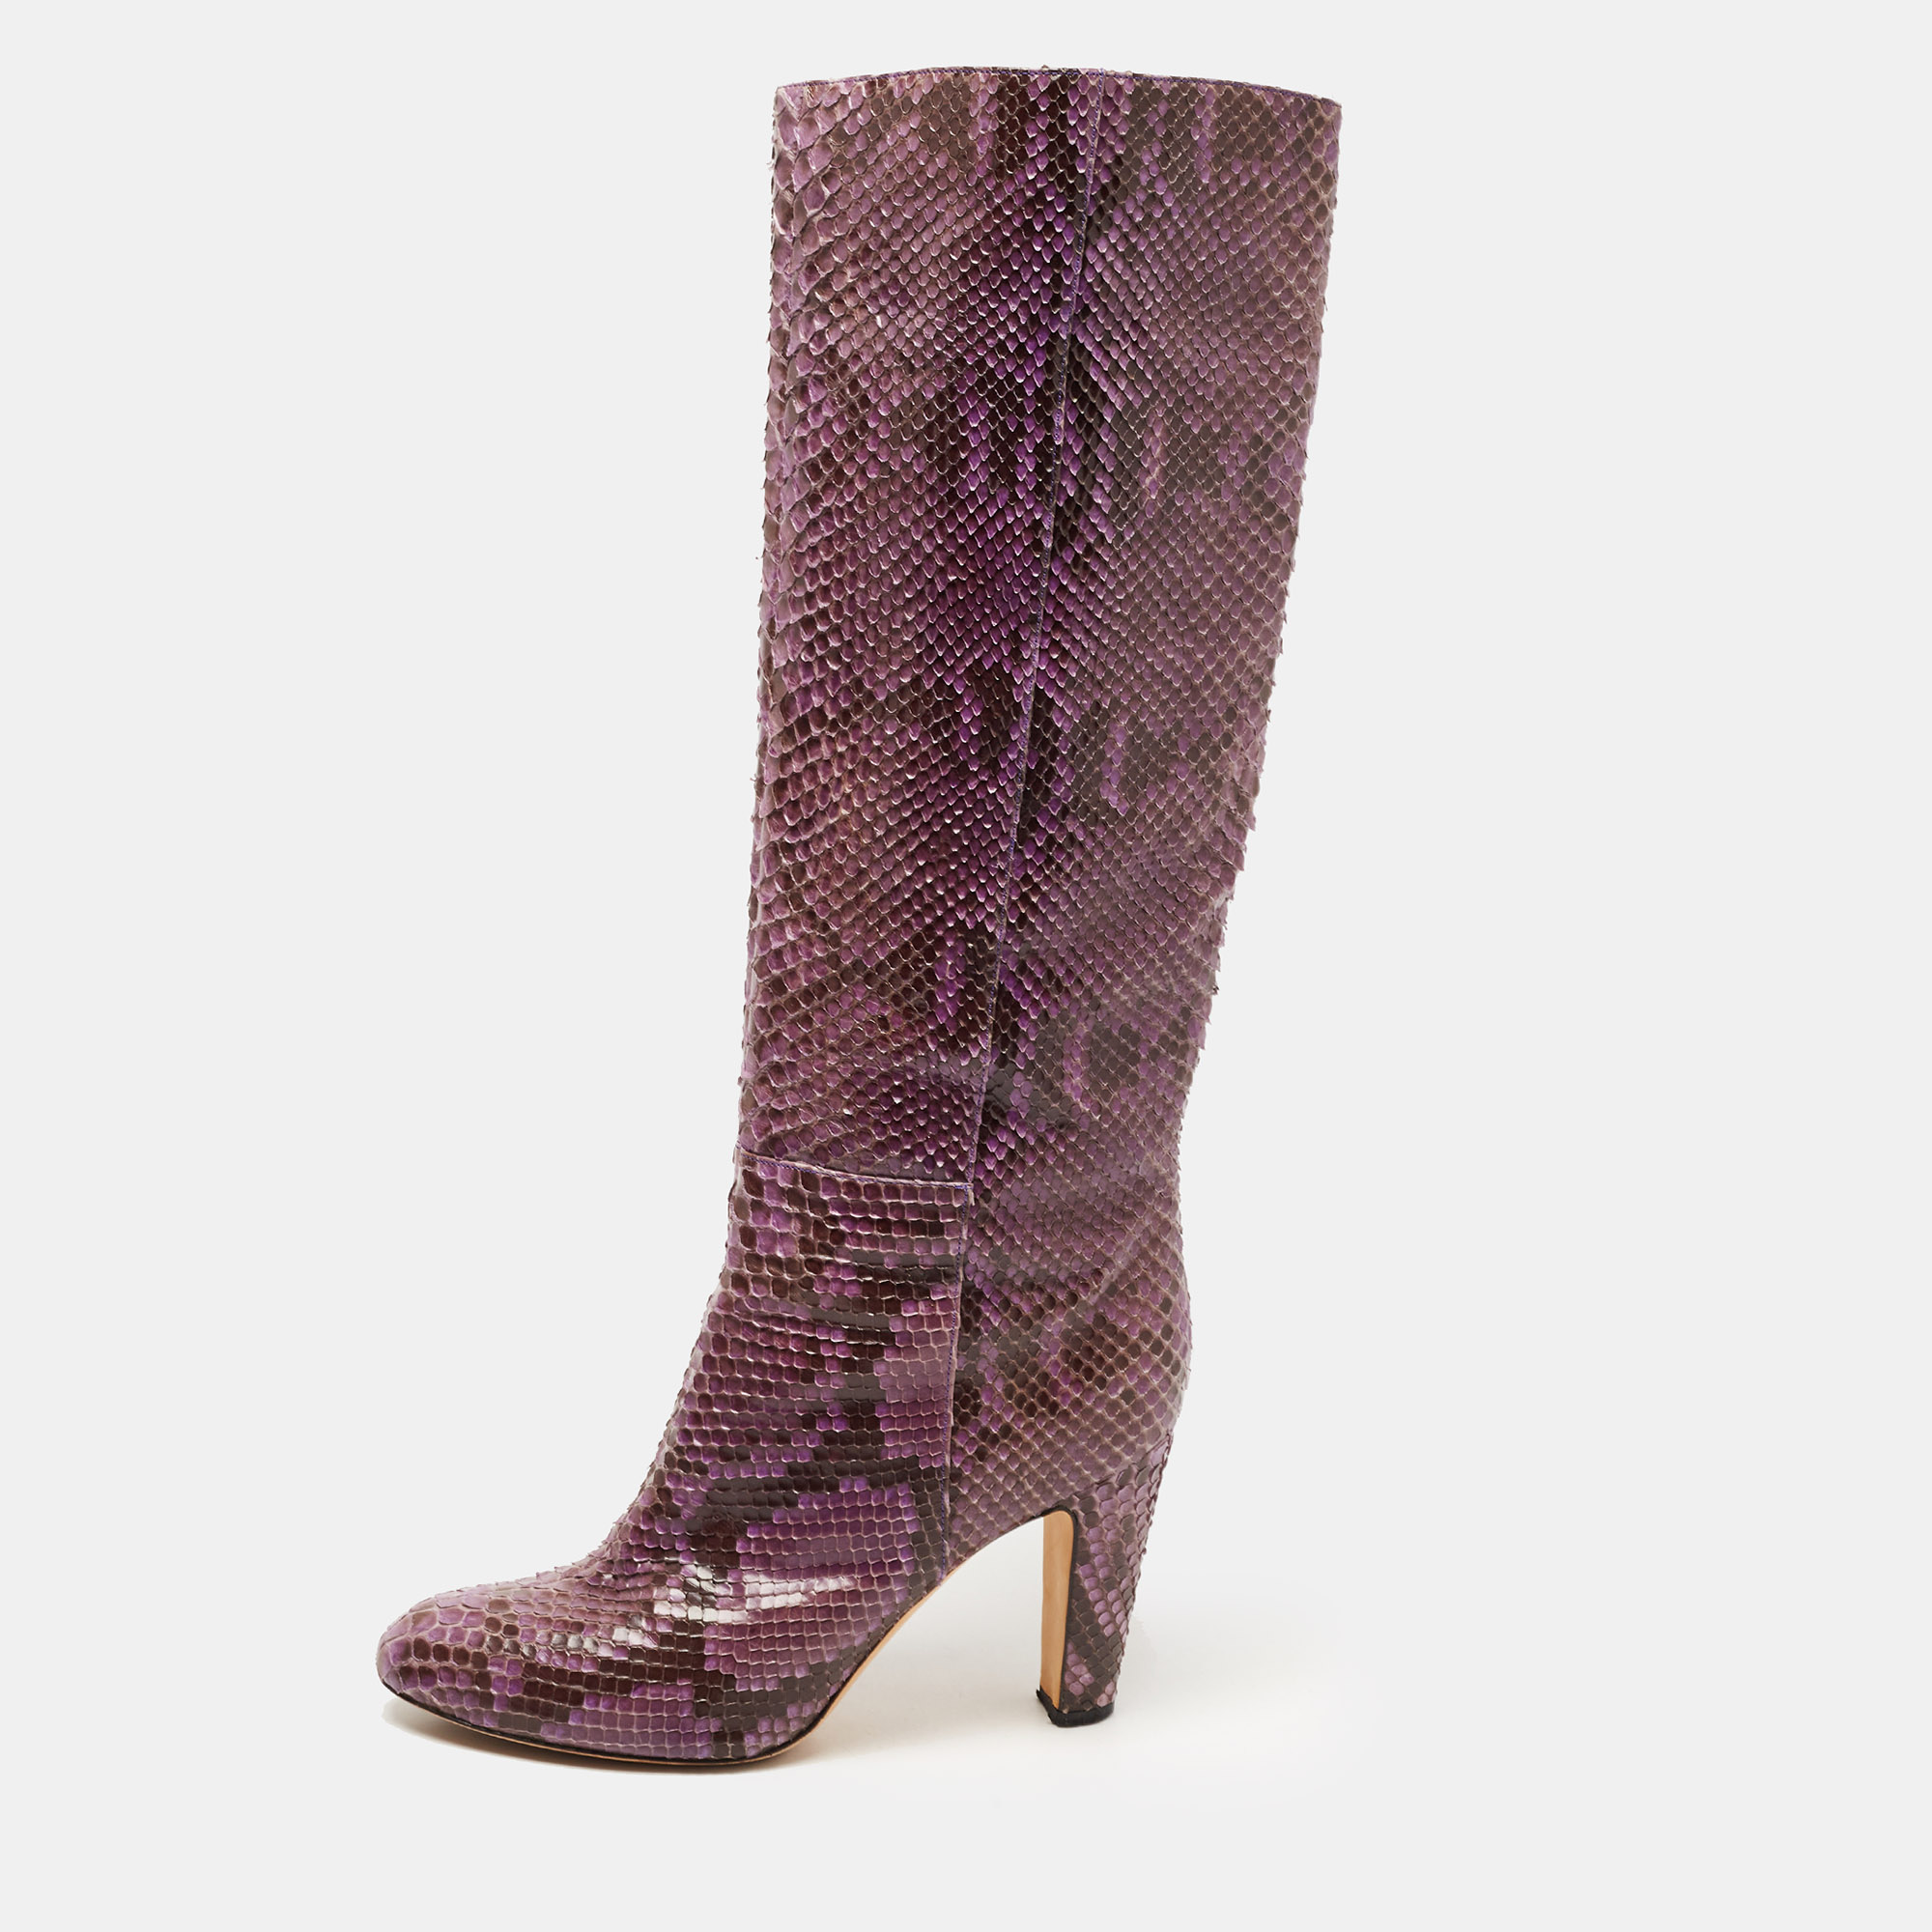 Sergio rossi purple python knee length boots size 41